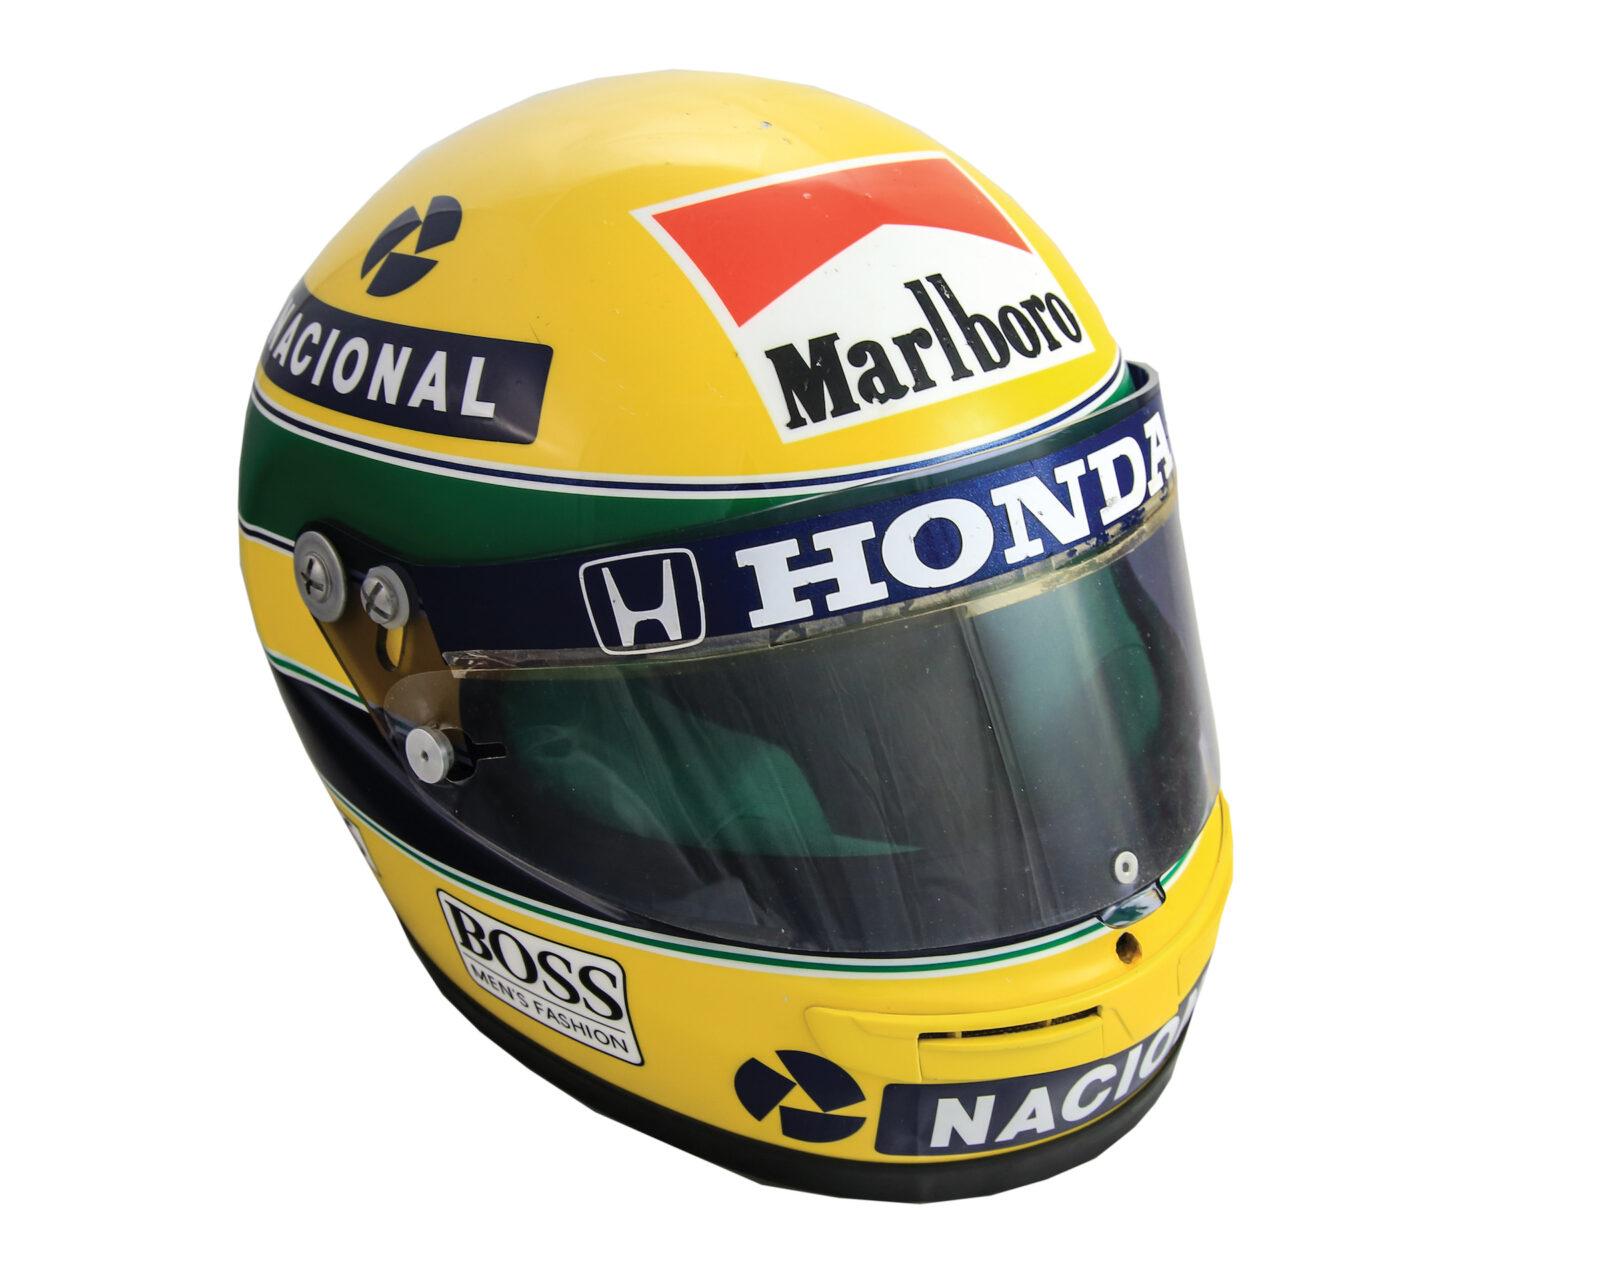 Ayrton Senna's Helmet - Worn During His 1990 Formula 1 World Championship Winning Season